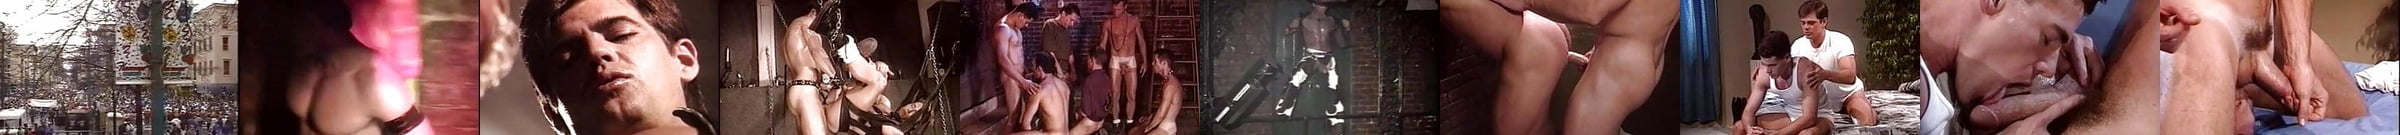 Aiden Shaw And Derek Cruise Gay Vintage Porn Fb Xhamster Xhamster